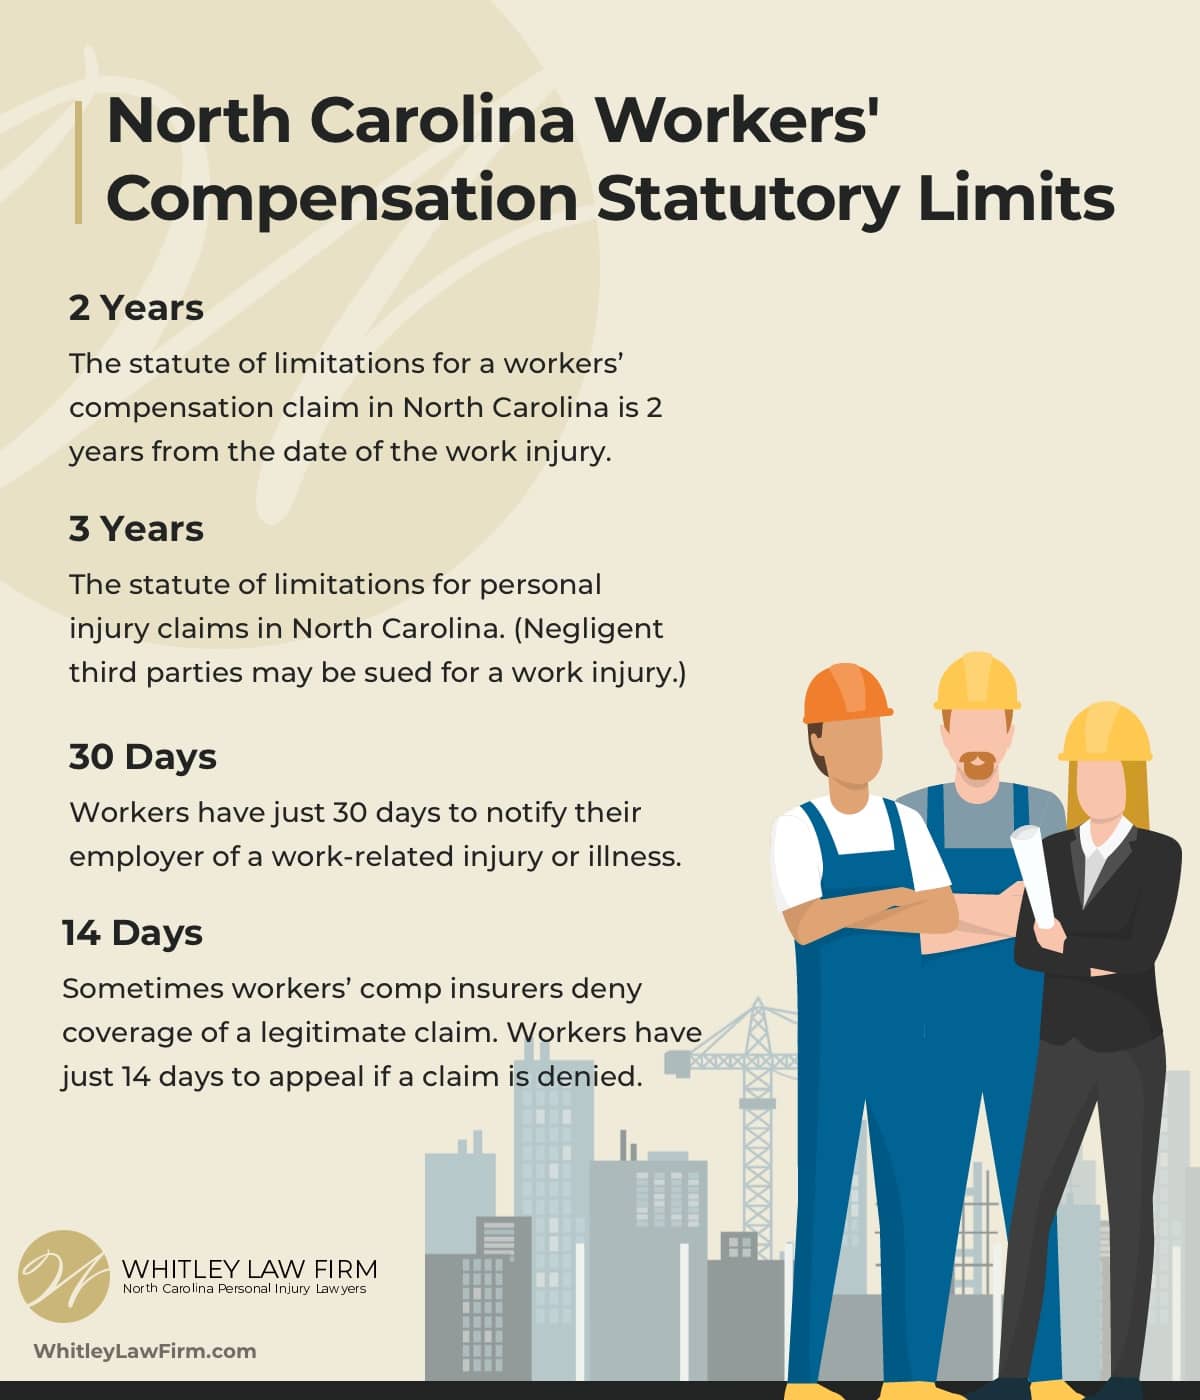 North Carolina workers' compensation statutory limits